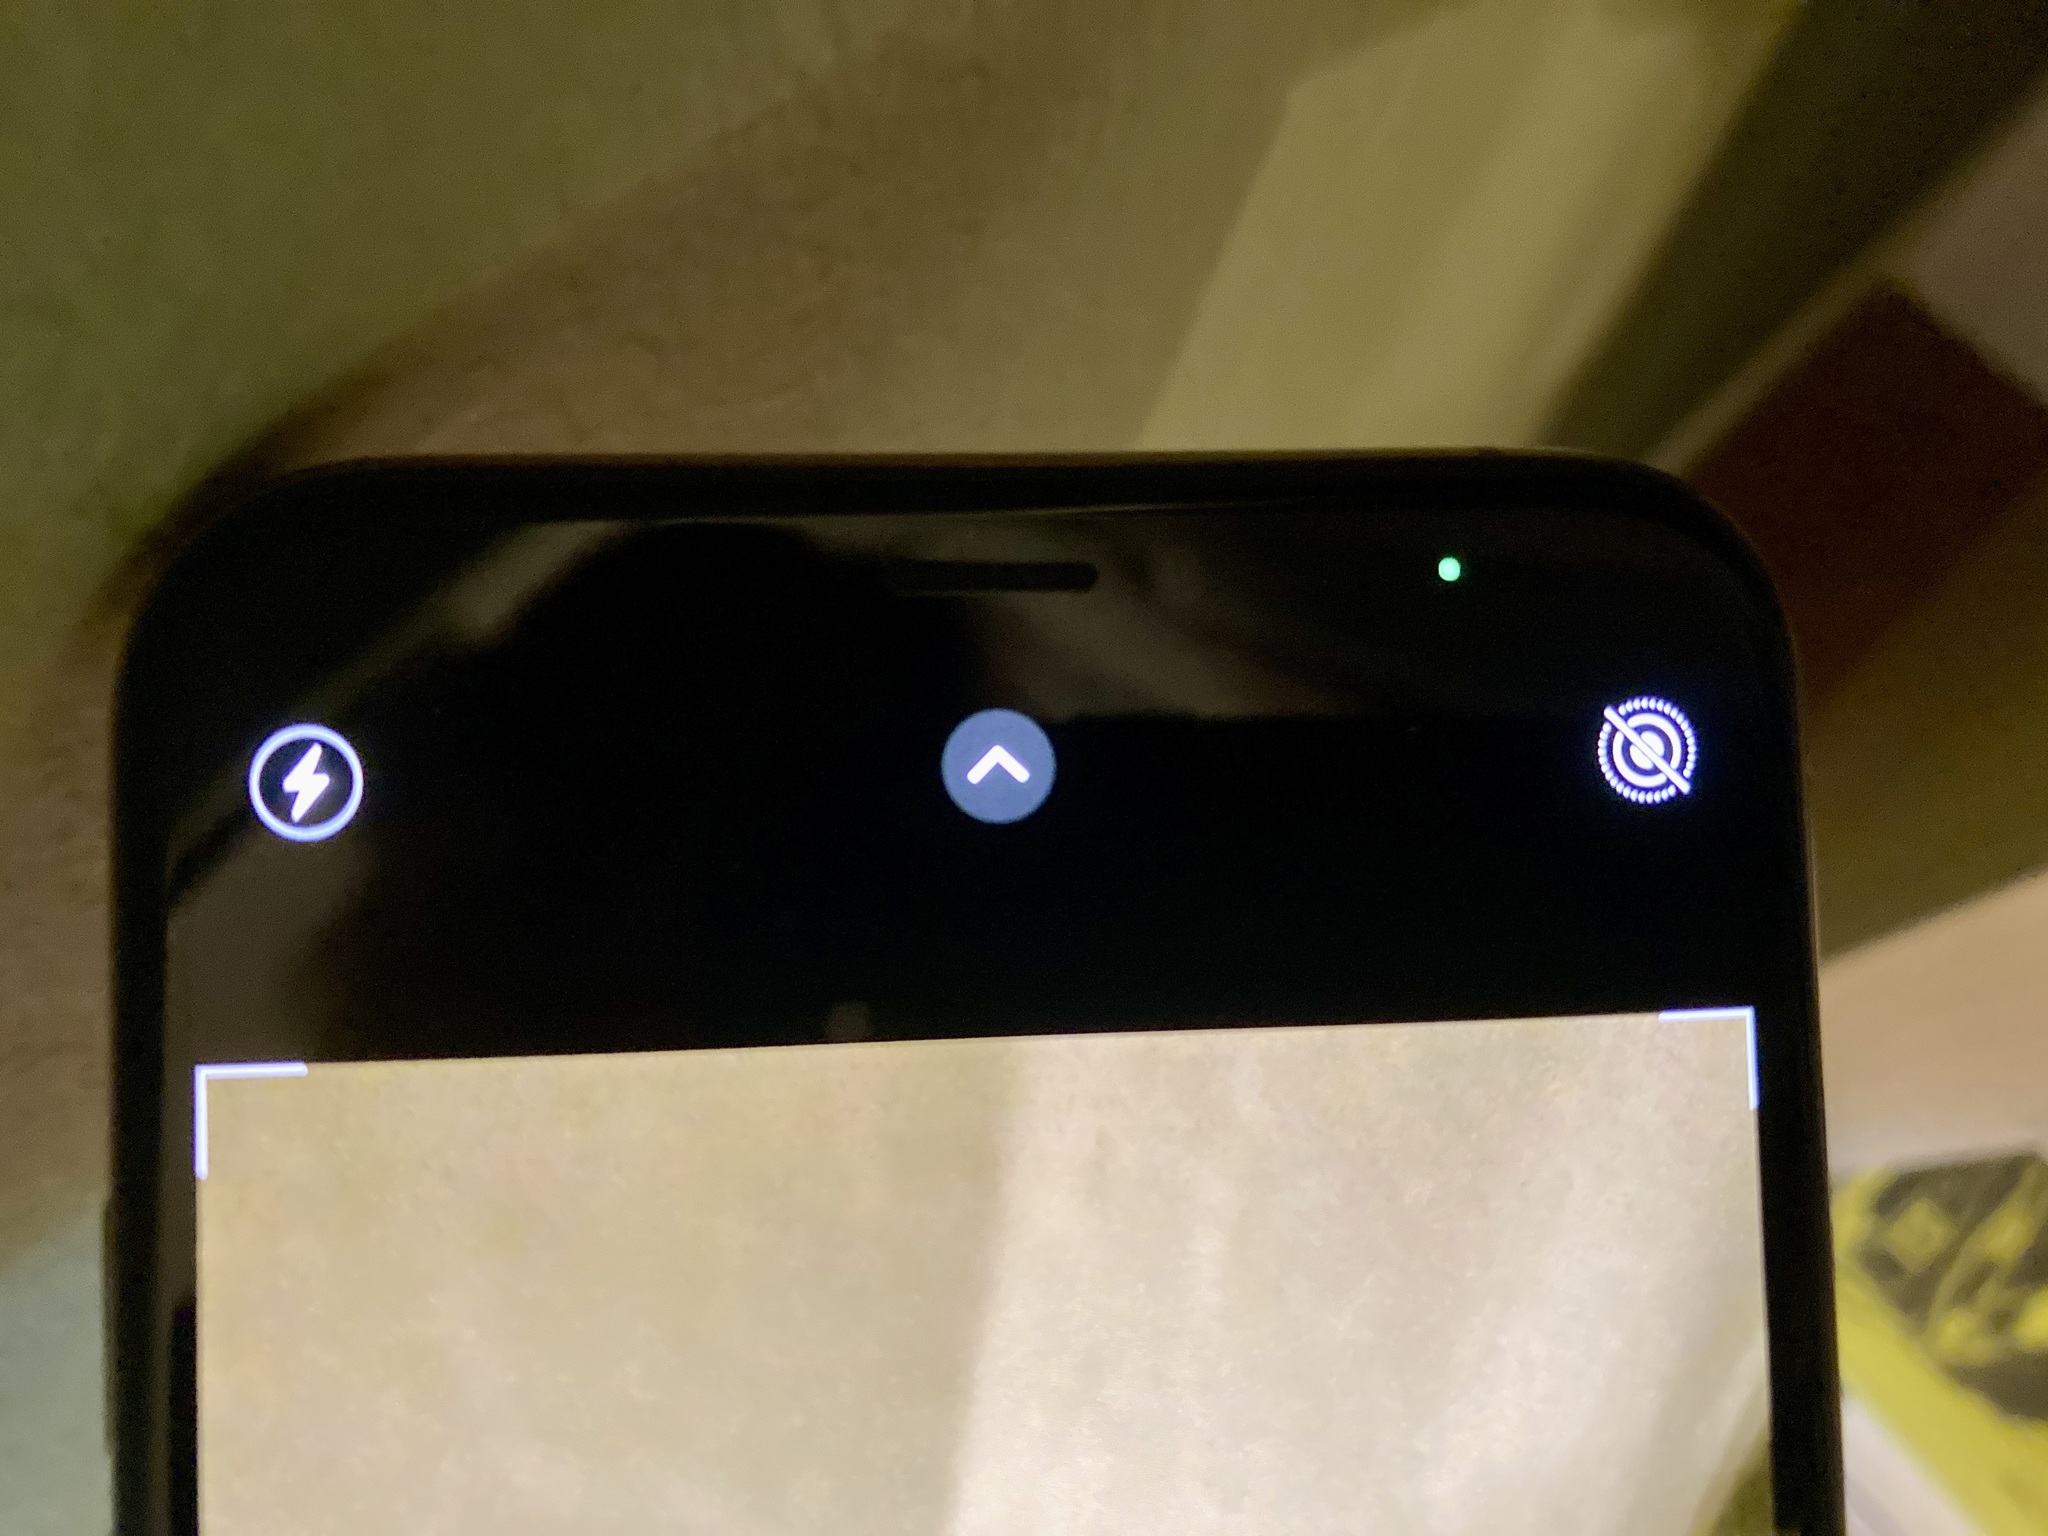 Camera On Indicator in iOS 14